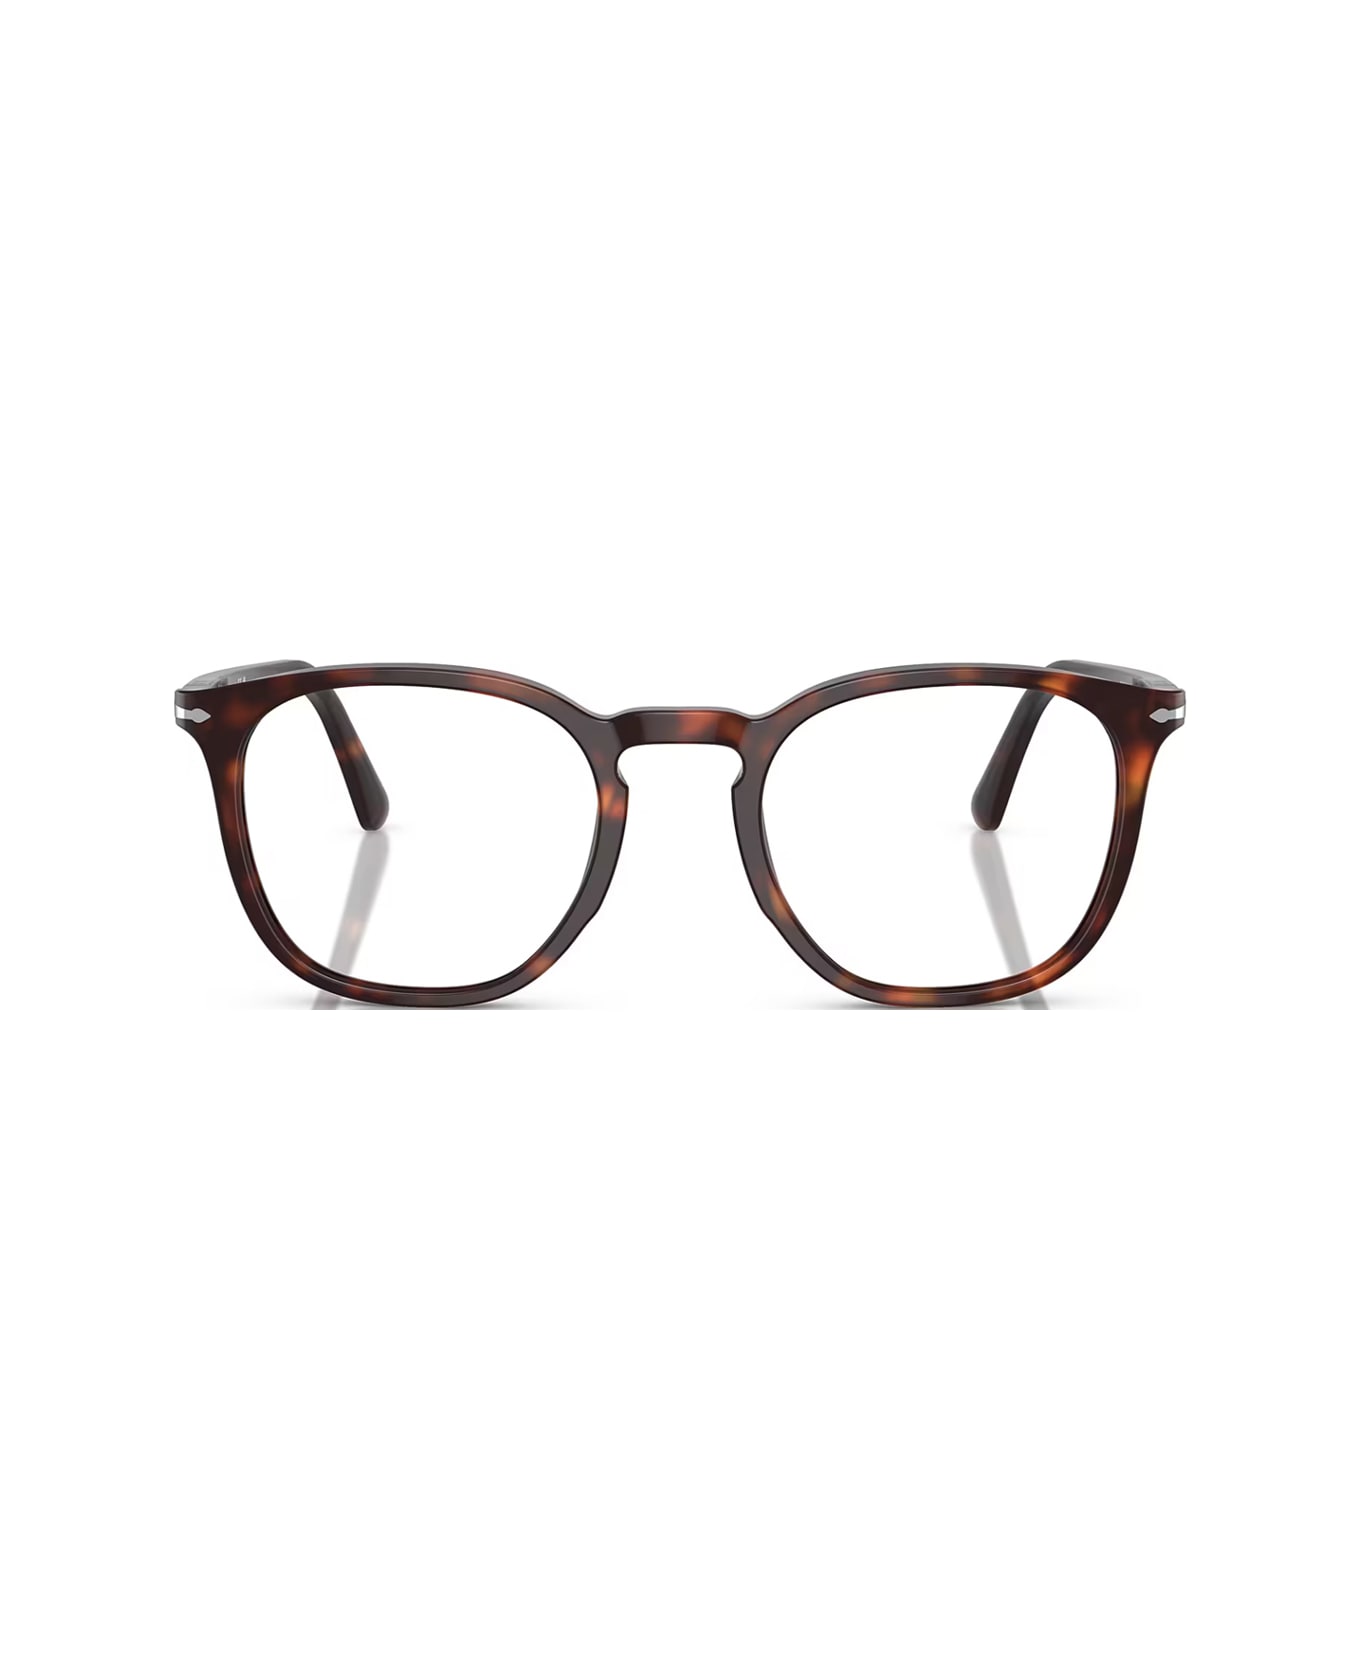 Persol Po3318v 24 Glasses - Marrone アイウェア